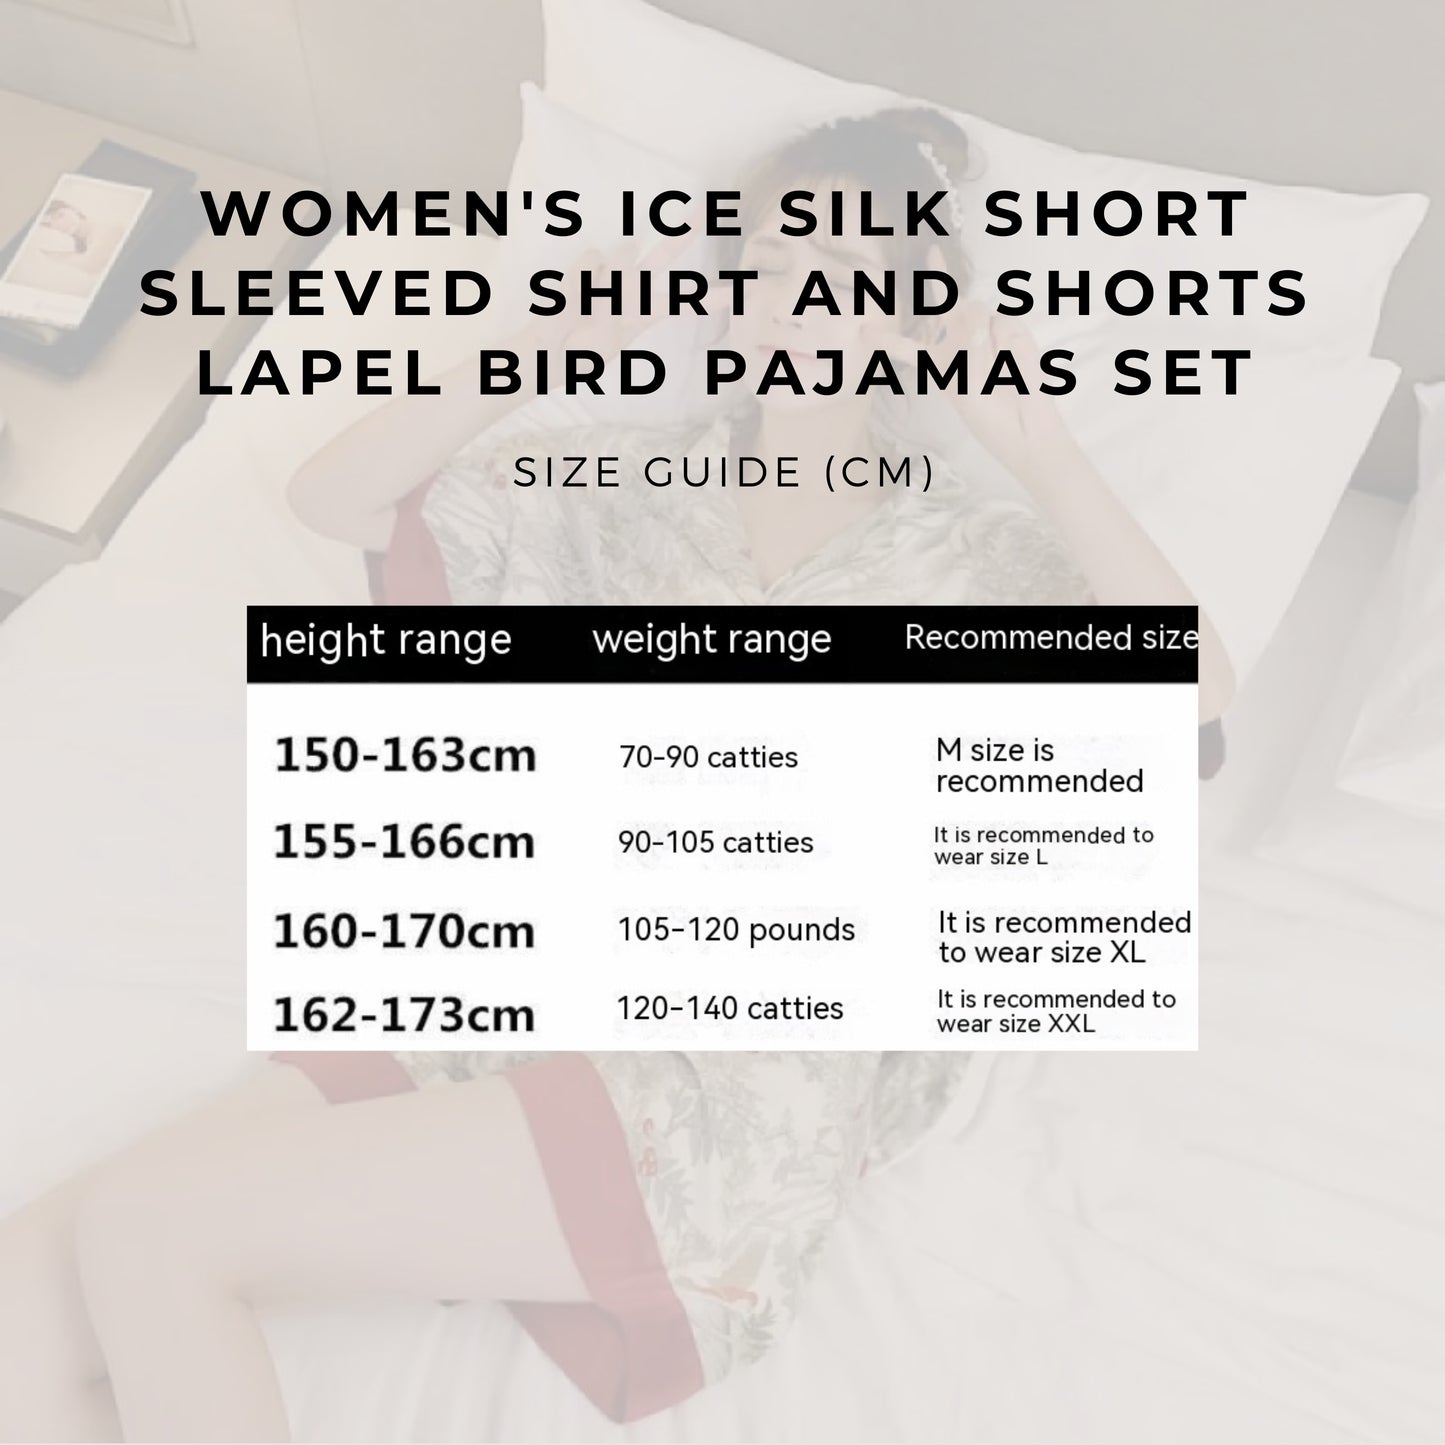 Women's Ice Silk Short Sleeved Shirt and Shorts Lapel Bird Pajamas Set